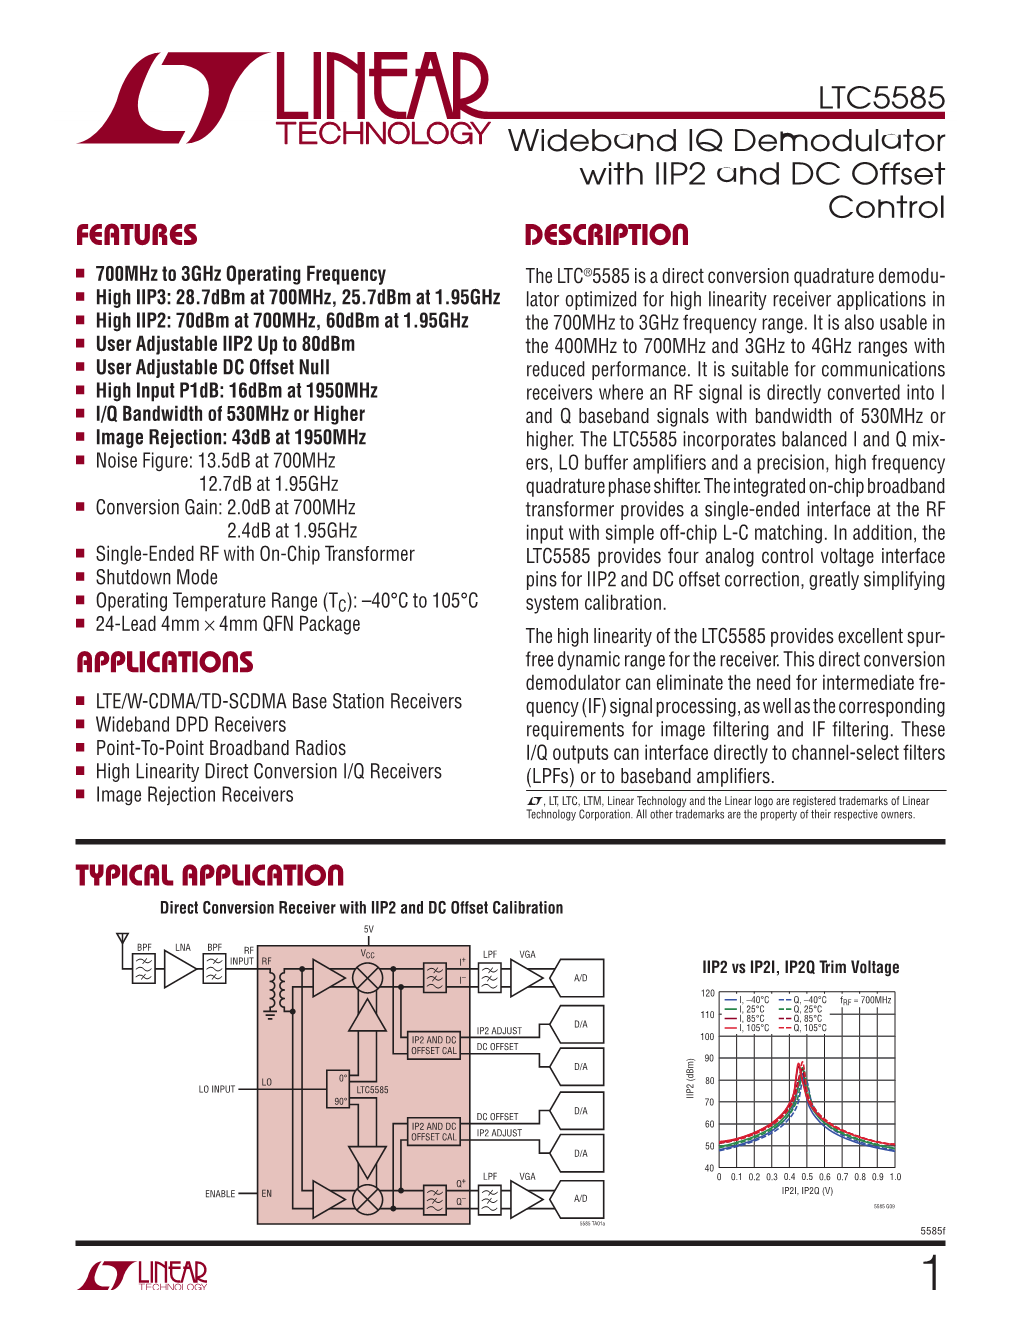 Wideband IQ Demodulator with IIP2 and DC Offset Control